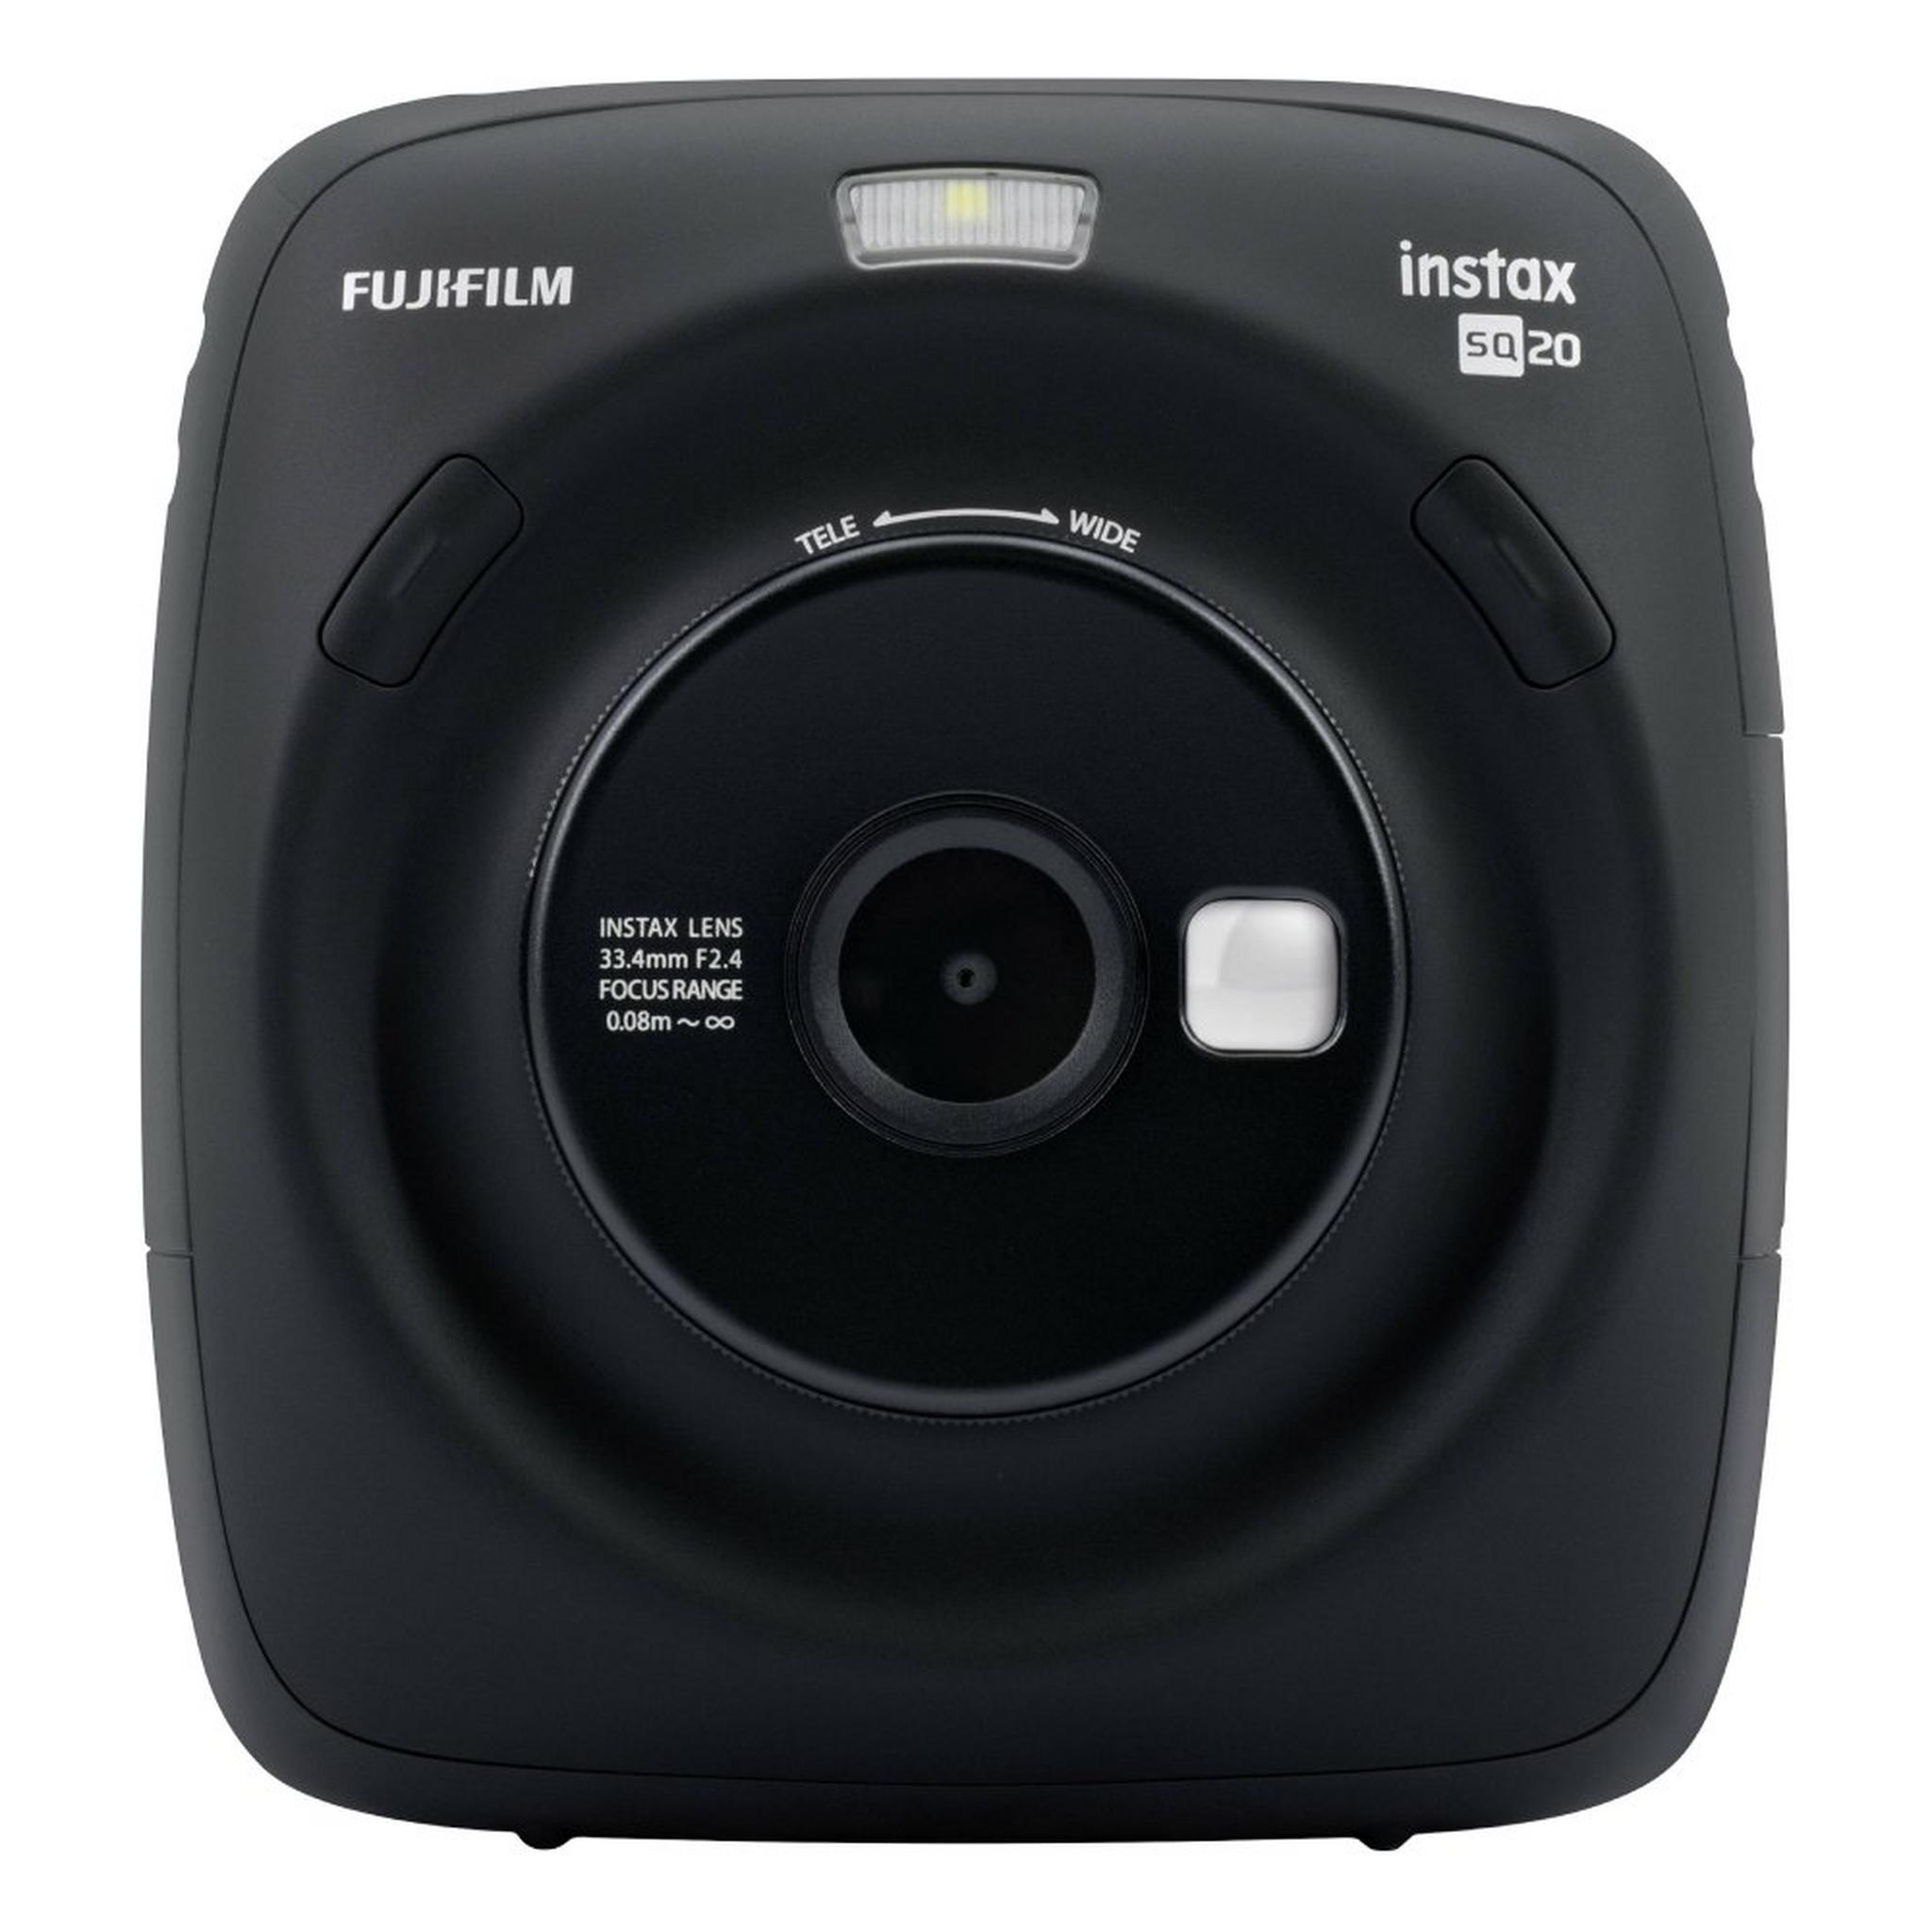 Fujifilm Instax Square SQ 20 Instant Film Camera - Black